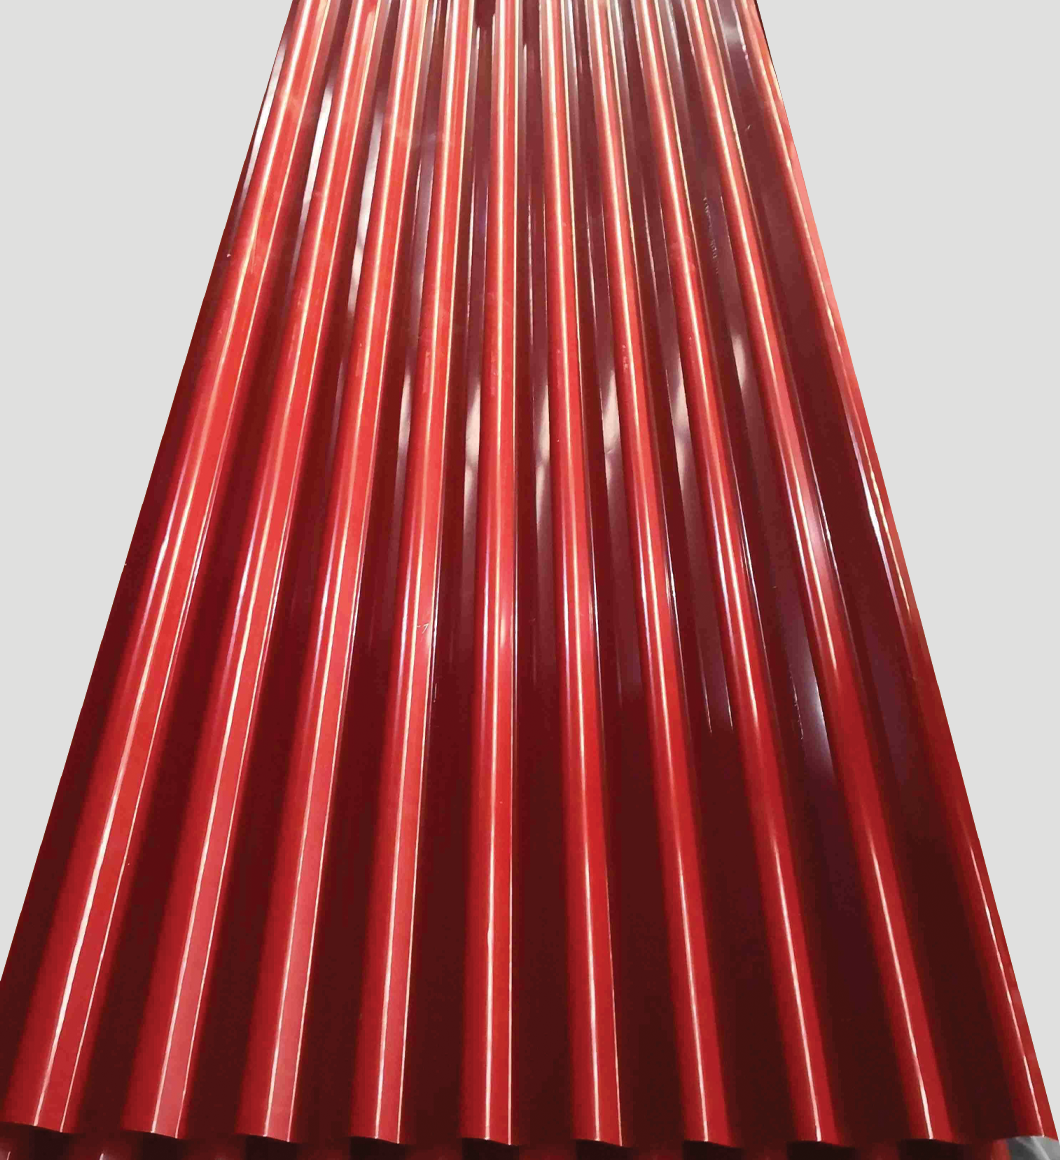 Bingwa Corrugated Glossy Finish, Gauge 30, 1M